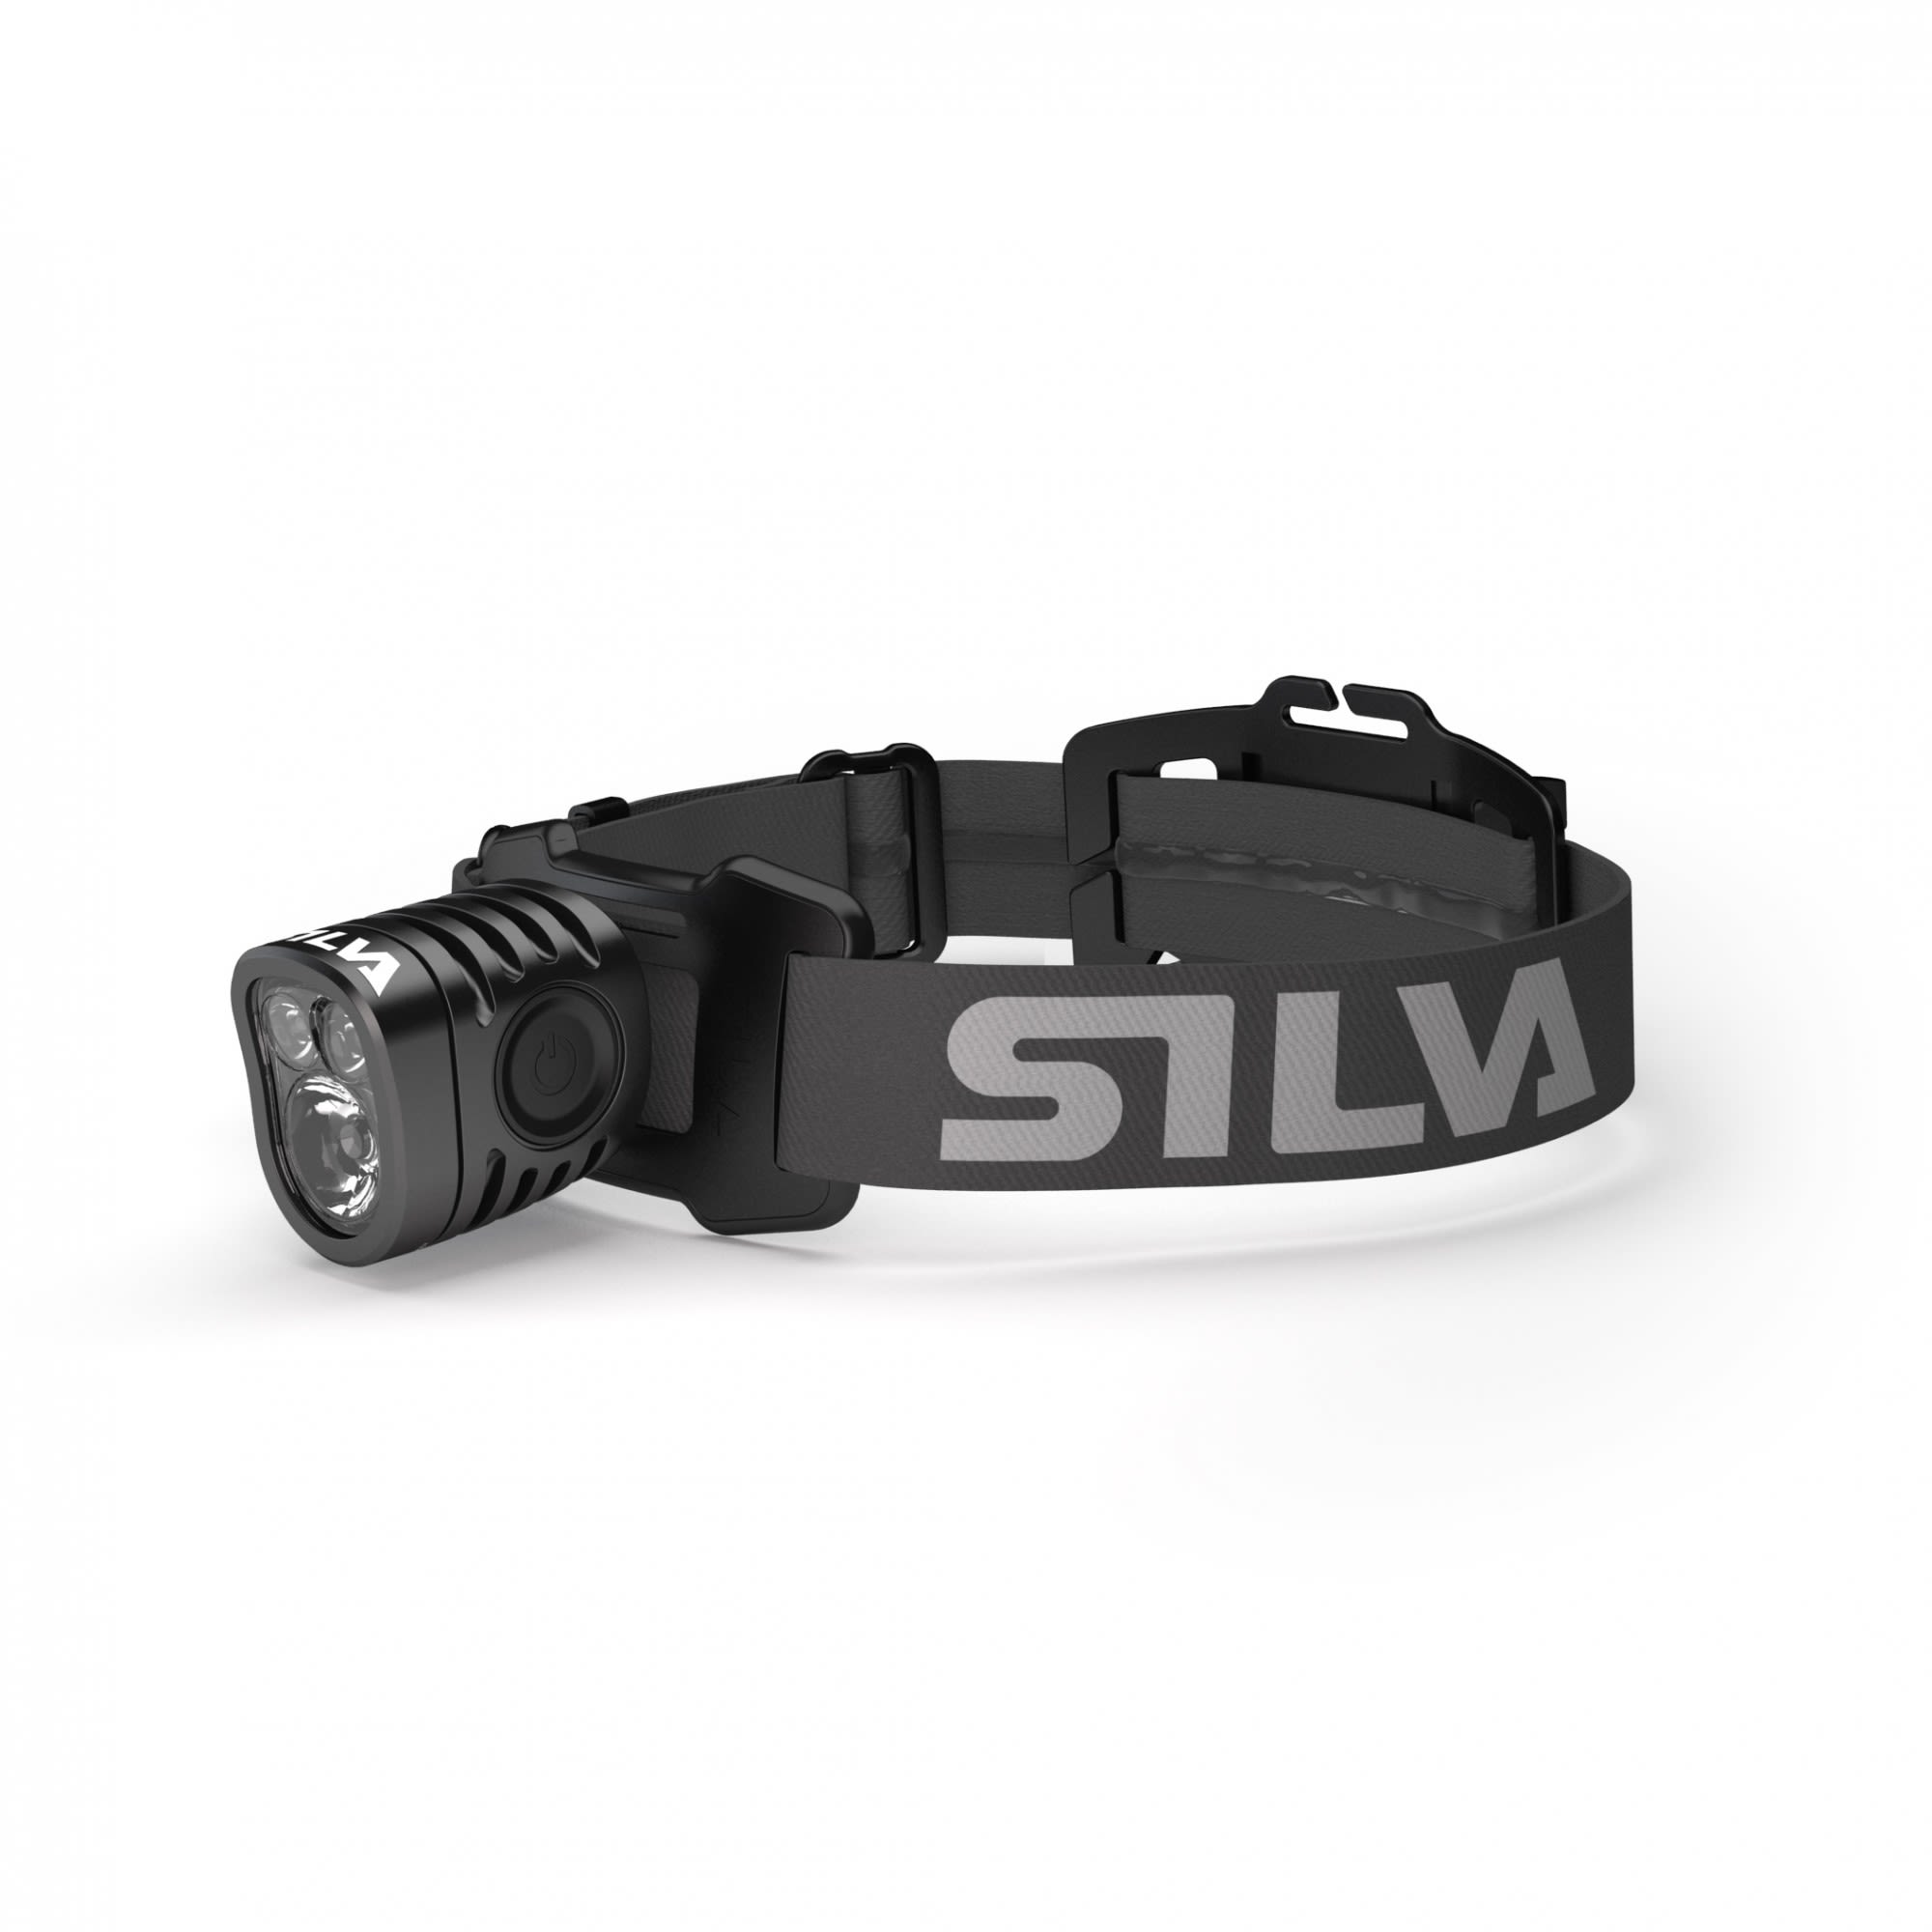 Silva Exceed 4R Schwarz- Stirnlampen- Grsse One Size - Farbe Black